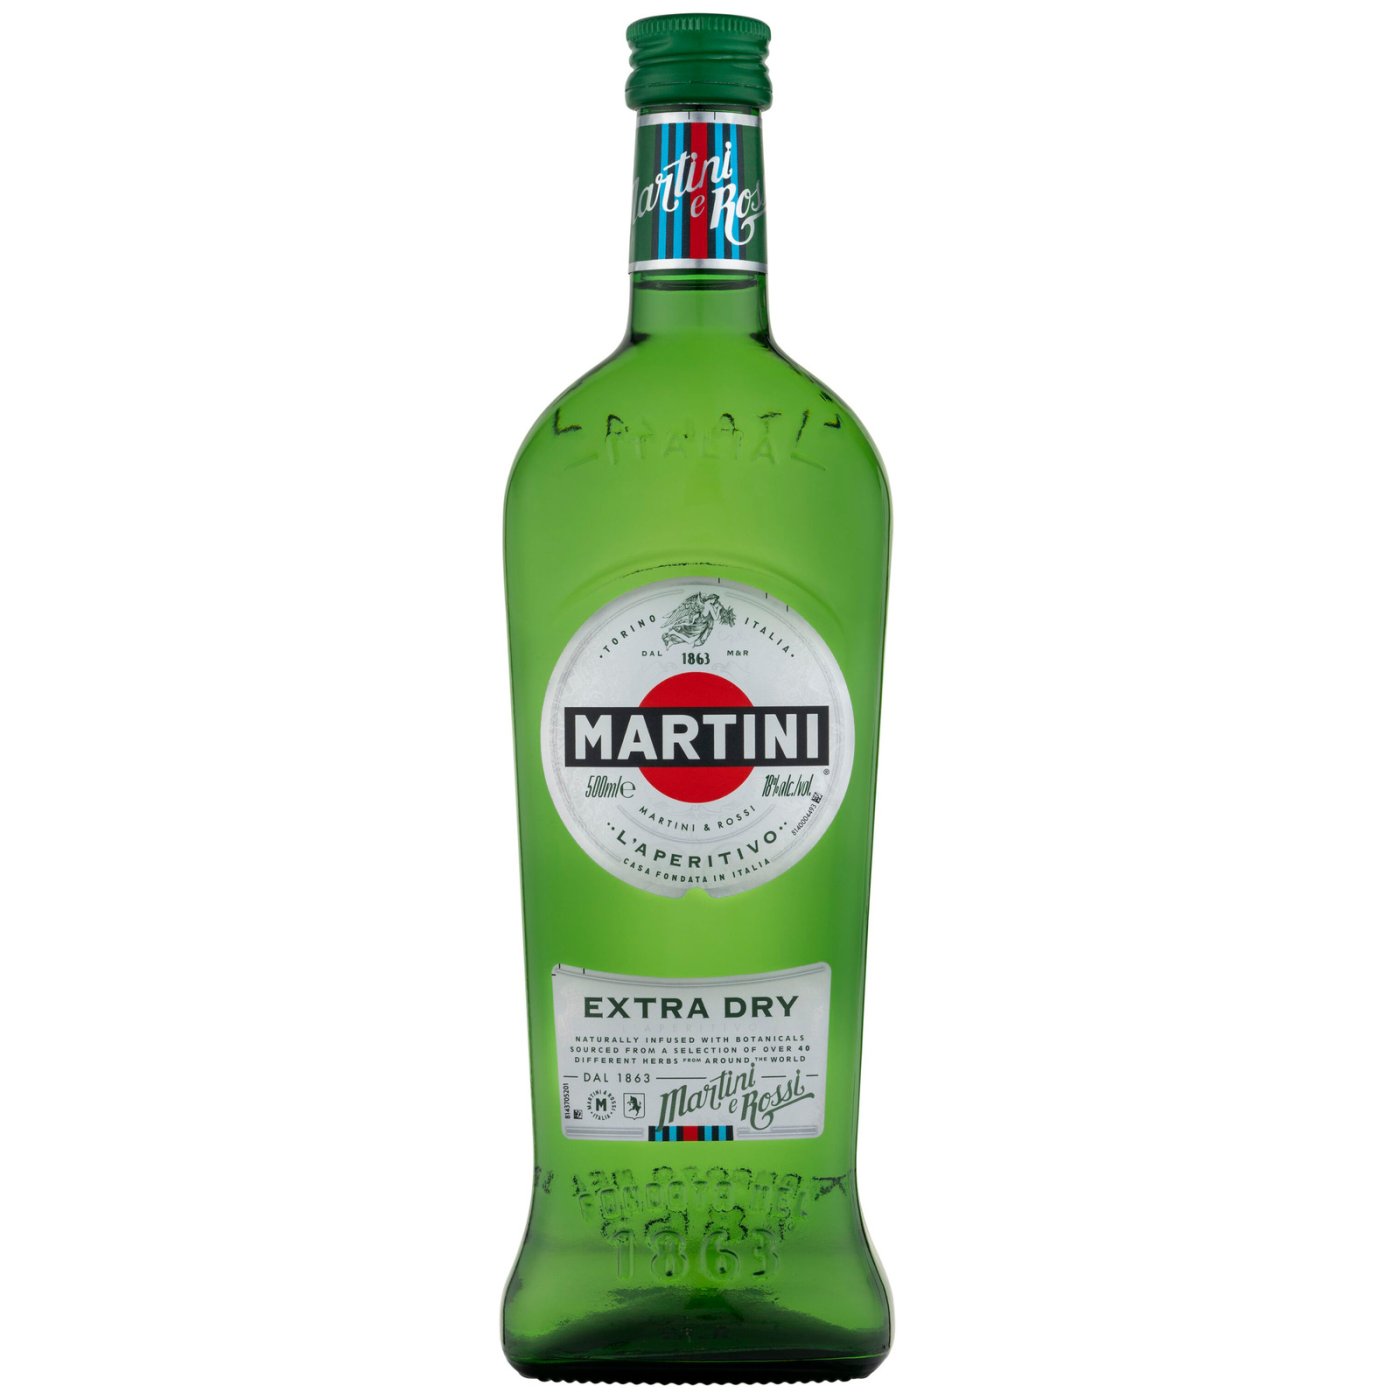 Martini - Extra Dry 75cl